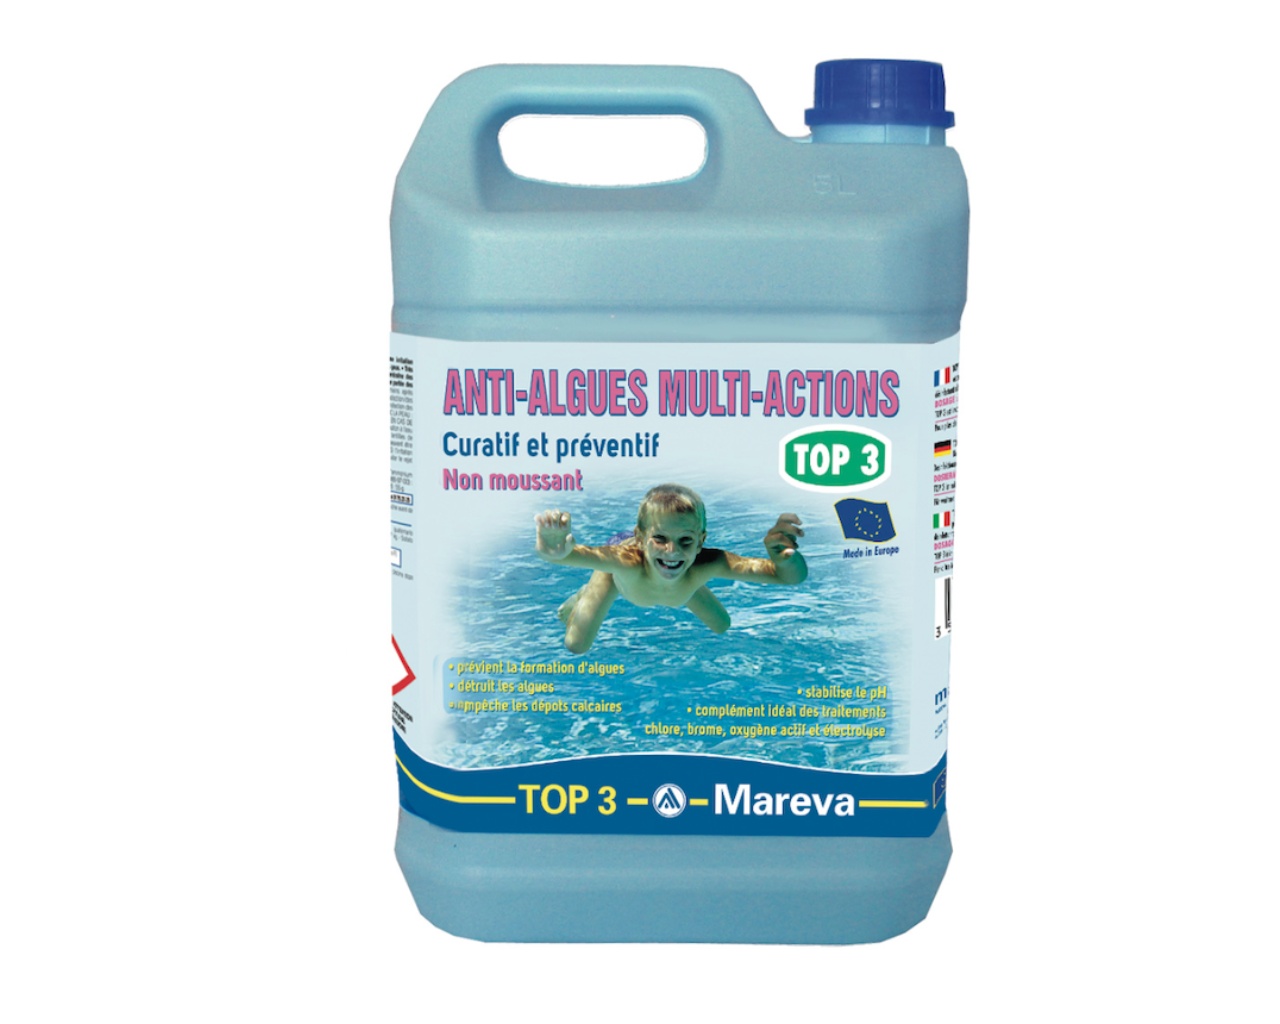 Acide chlorhydrique Agualab 4% 5 litres - OFFRE